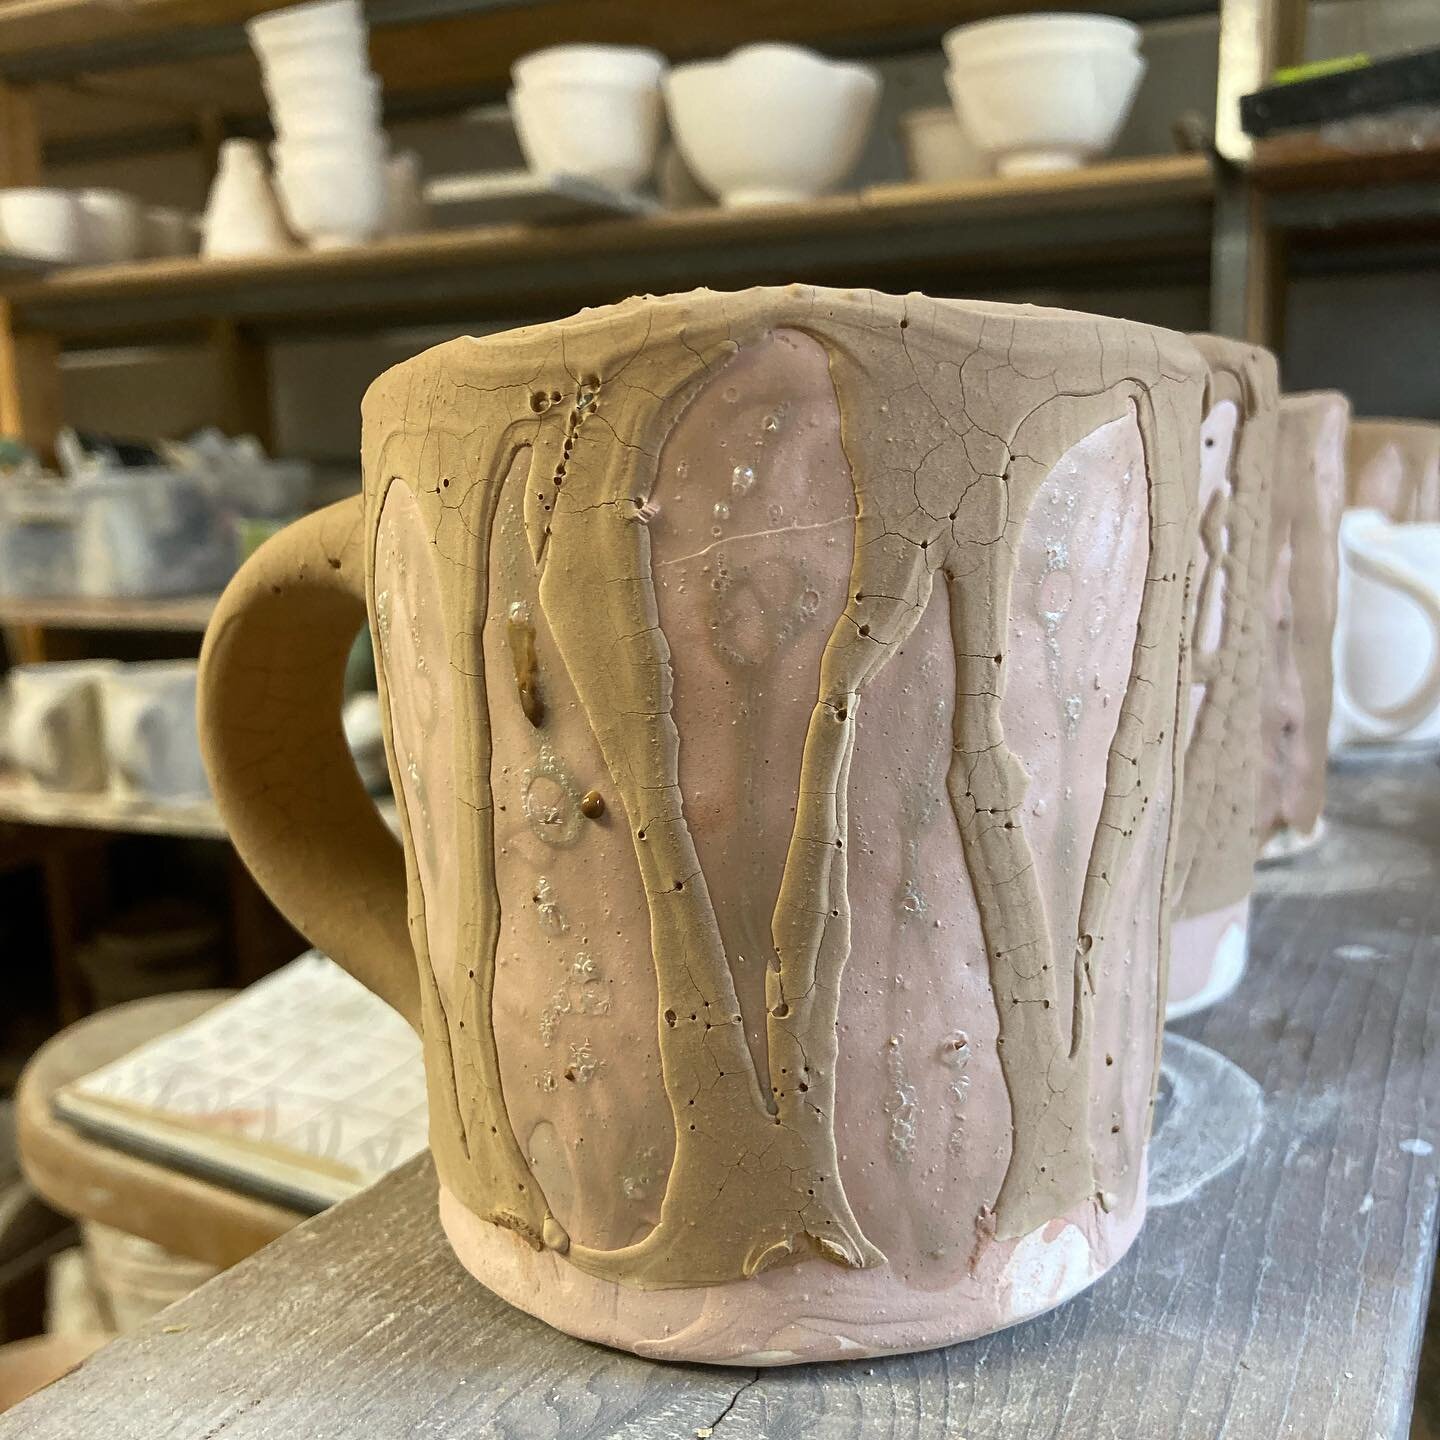 Glazing glazing glazing&hellip;🖌 

#pottery #ceramics #clay #mug #coffeemug #waxresist #studiopottery #wip #functionalpottery